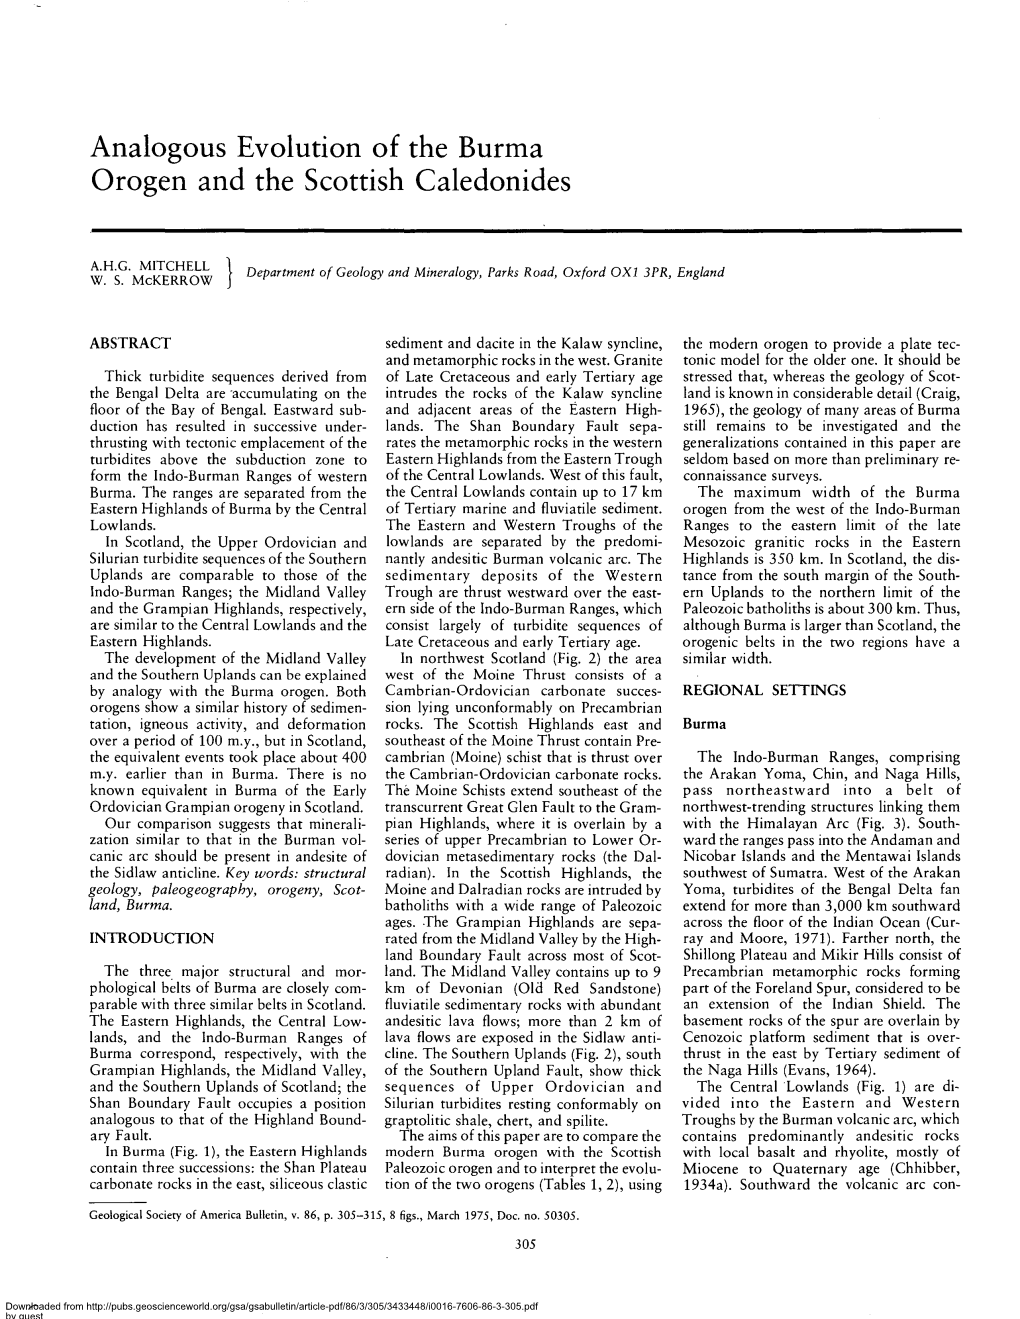 Analogous Evolution of the Burma Orogen and the Scottish Caledonides